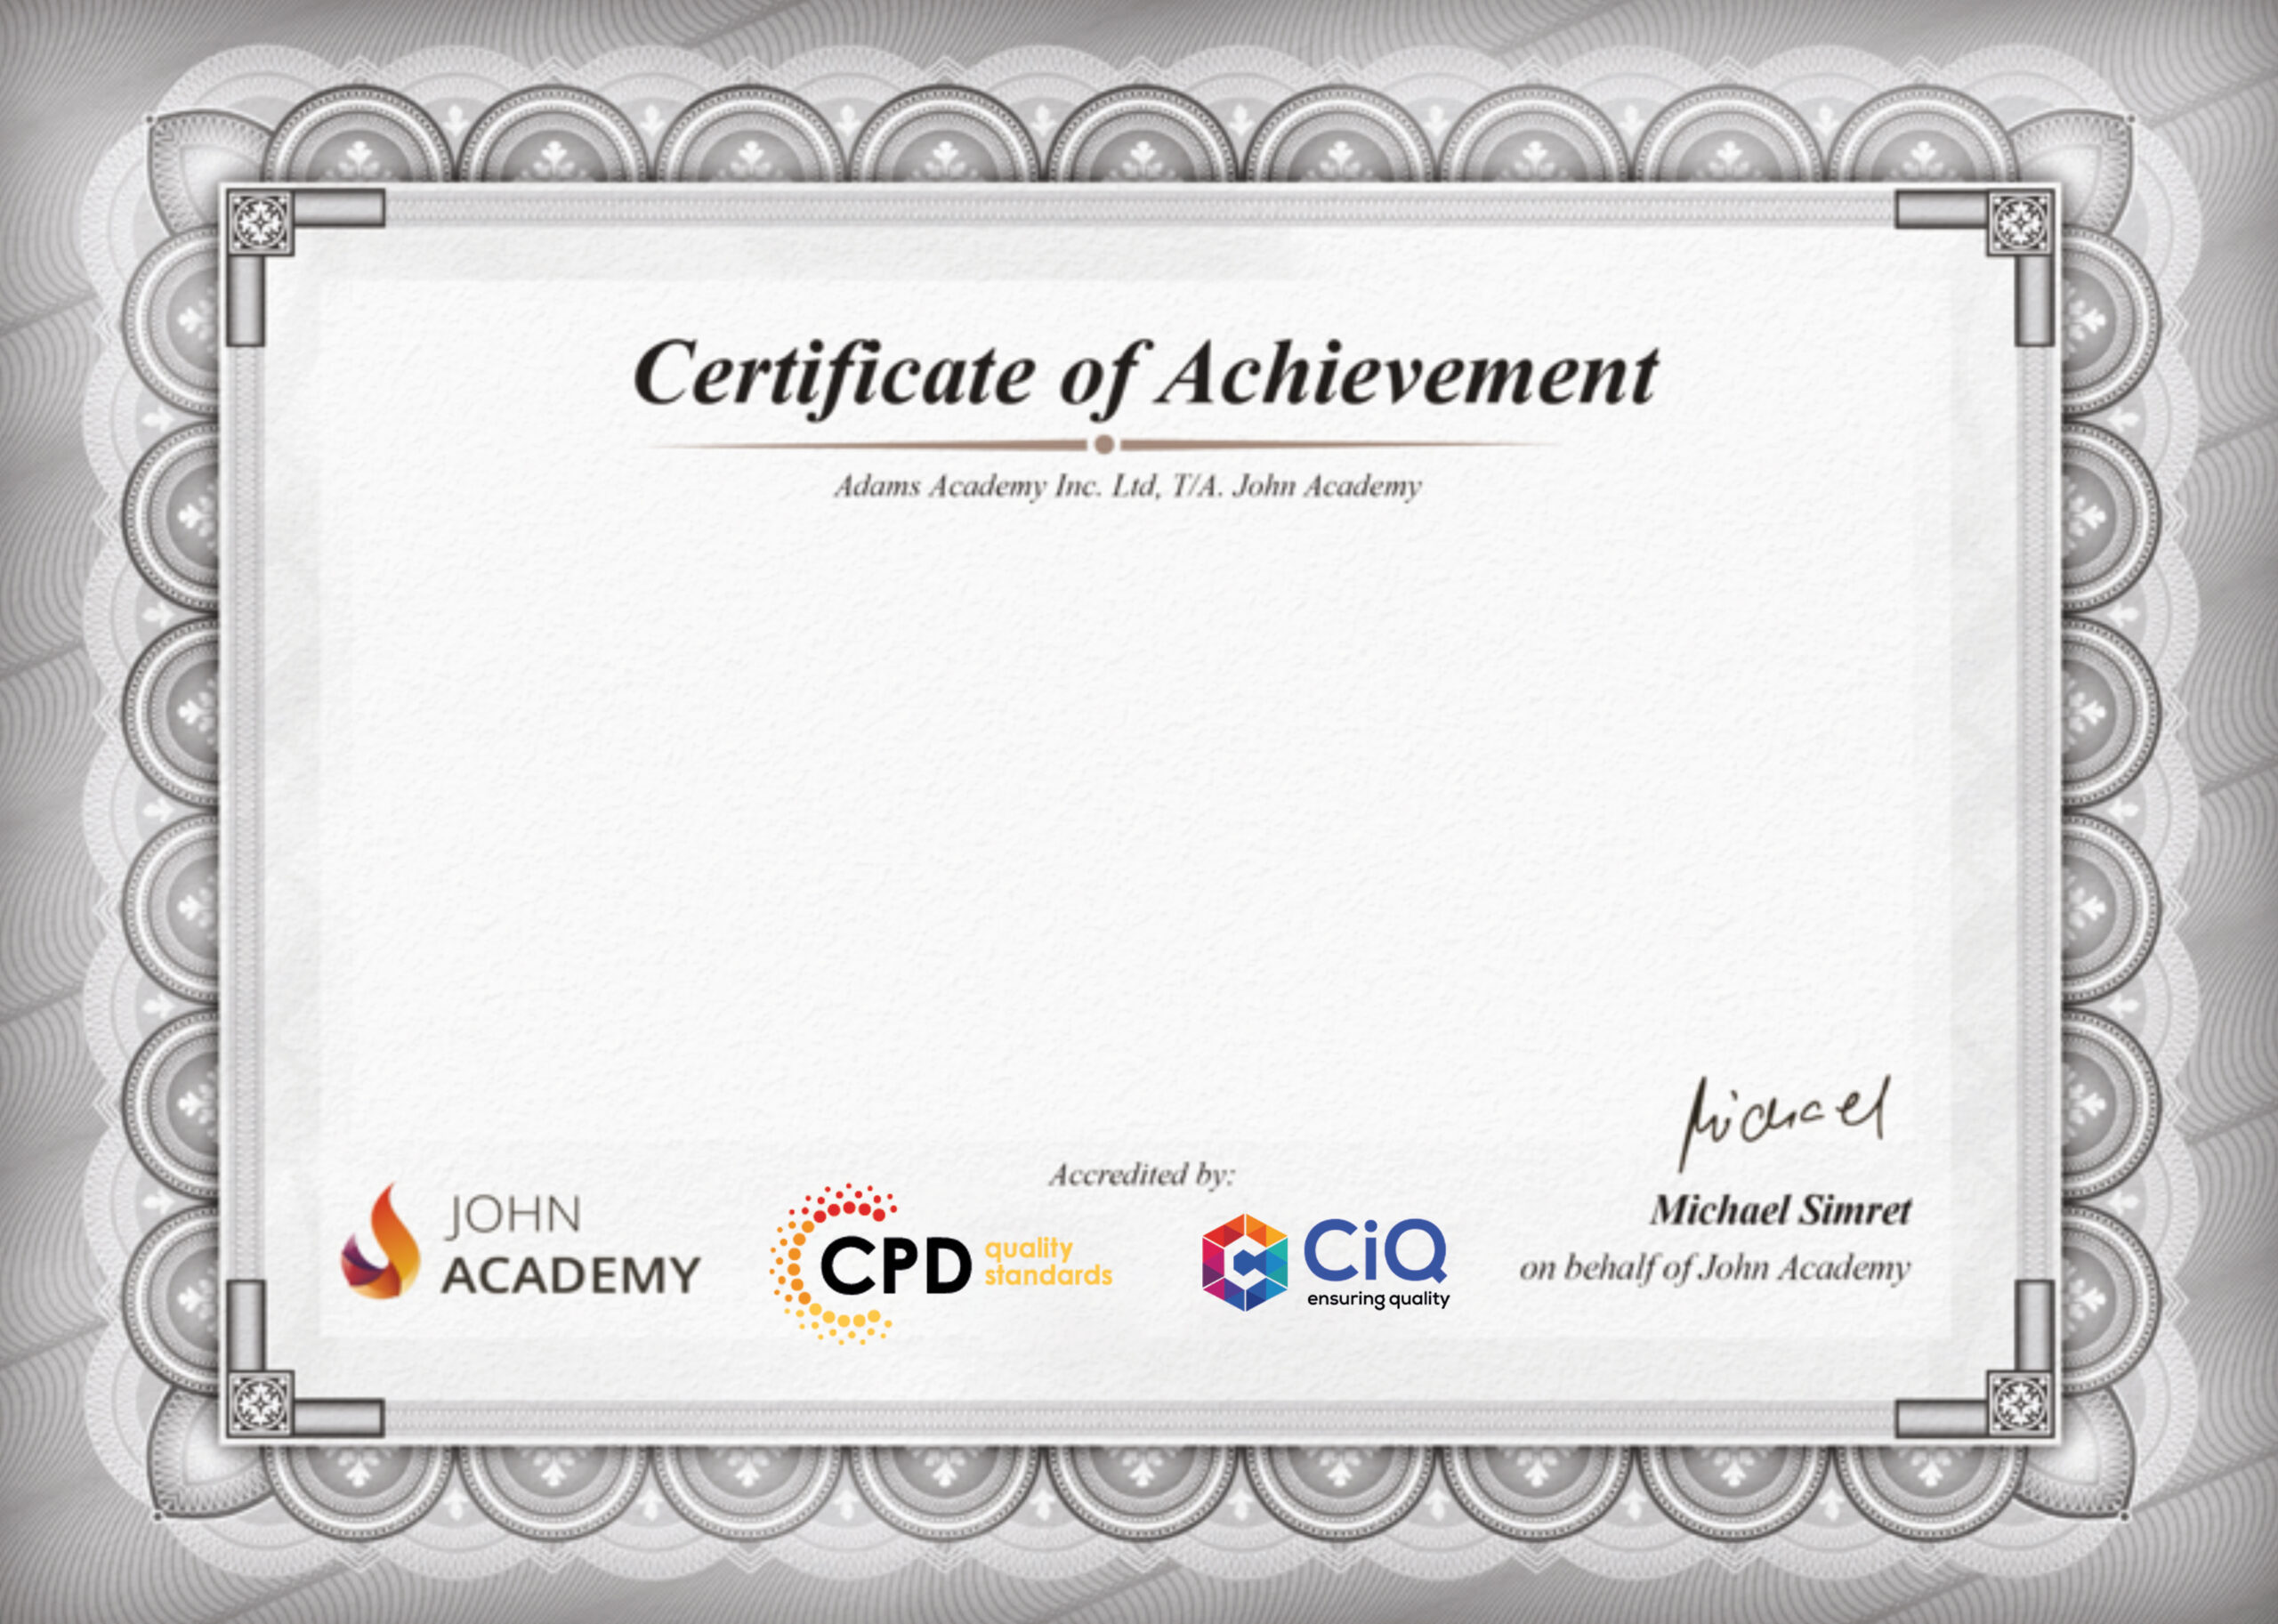 john academy certificate new